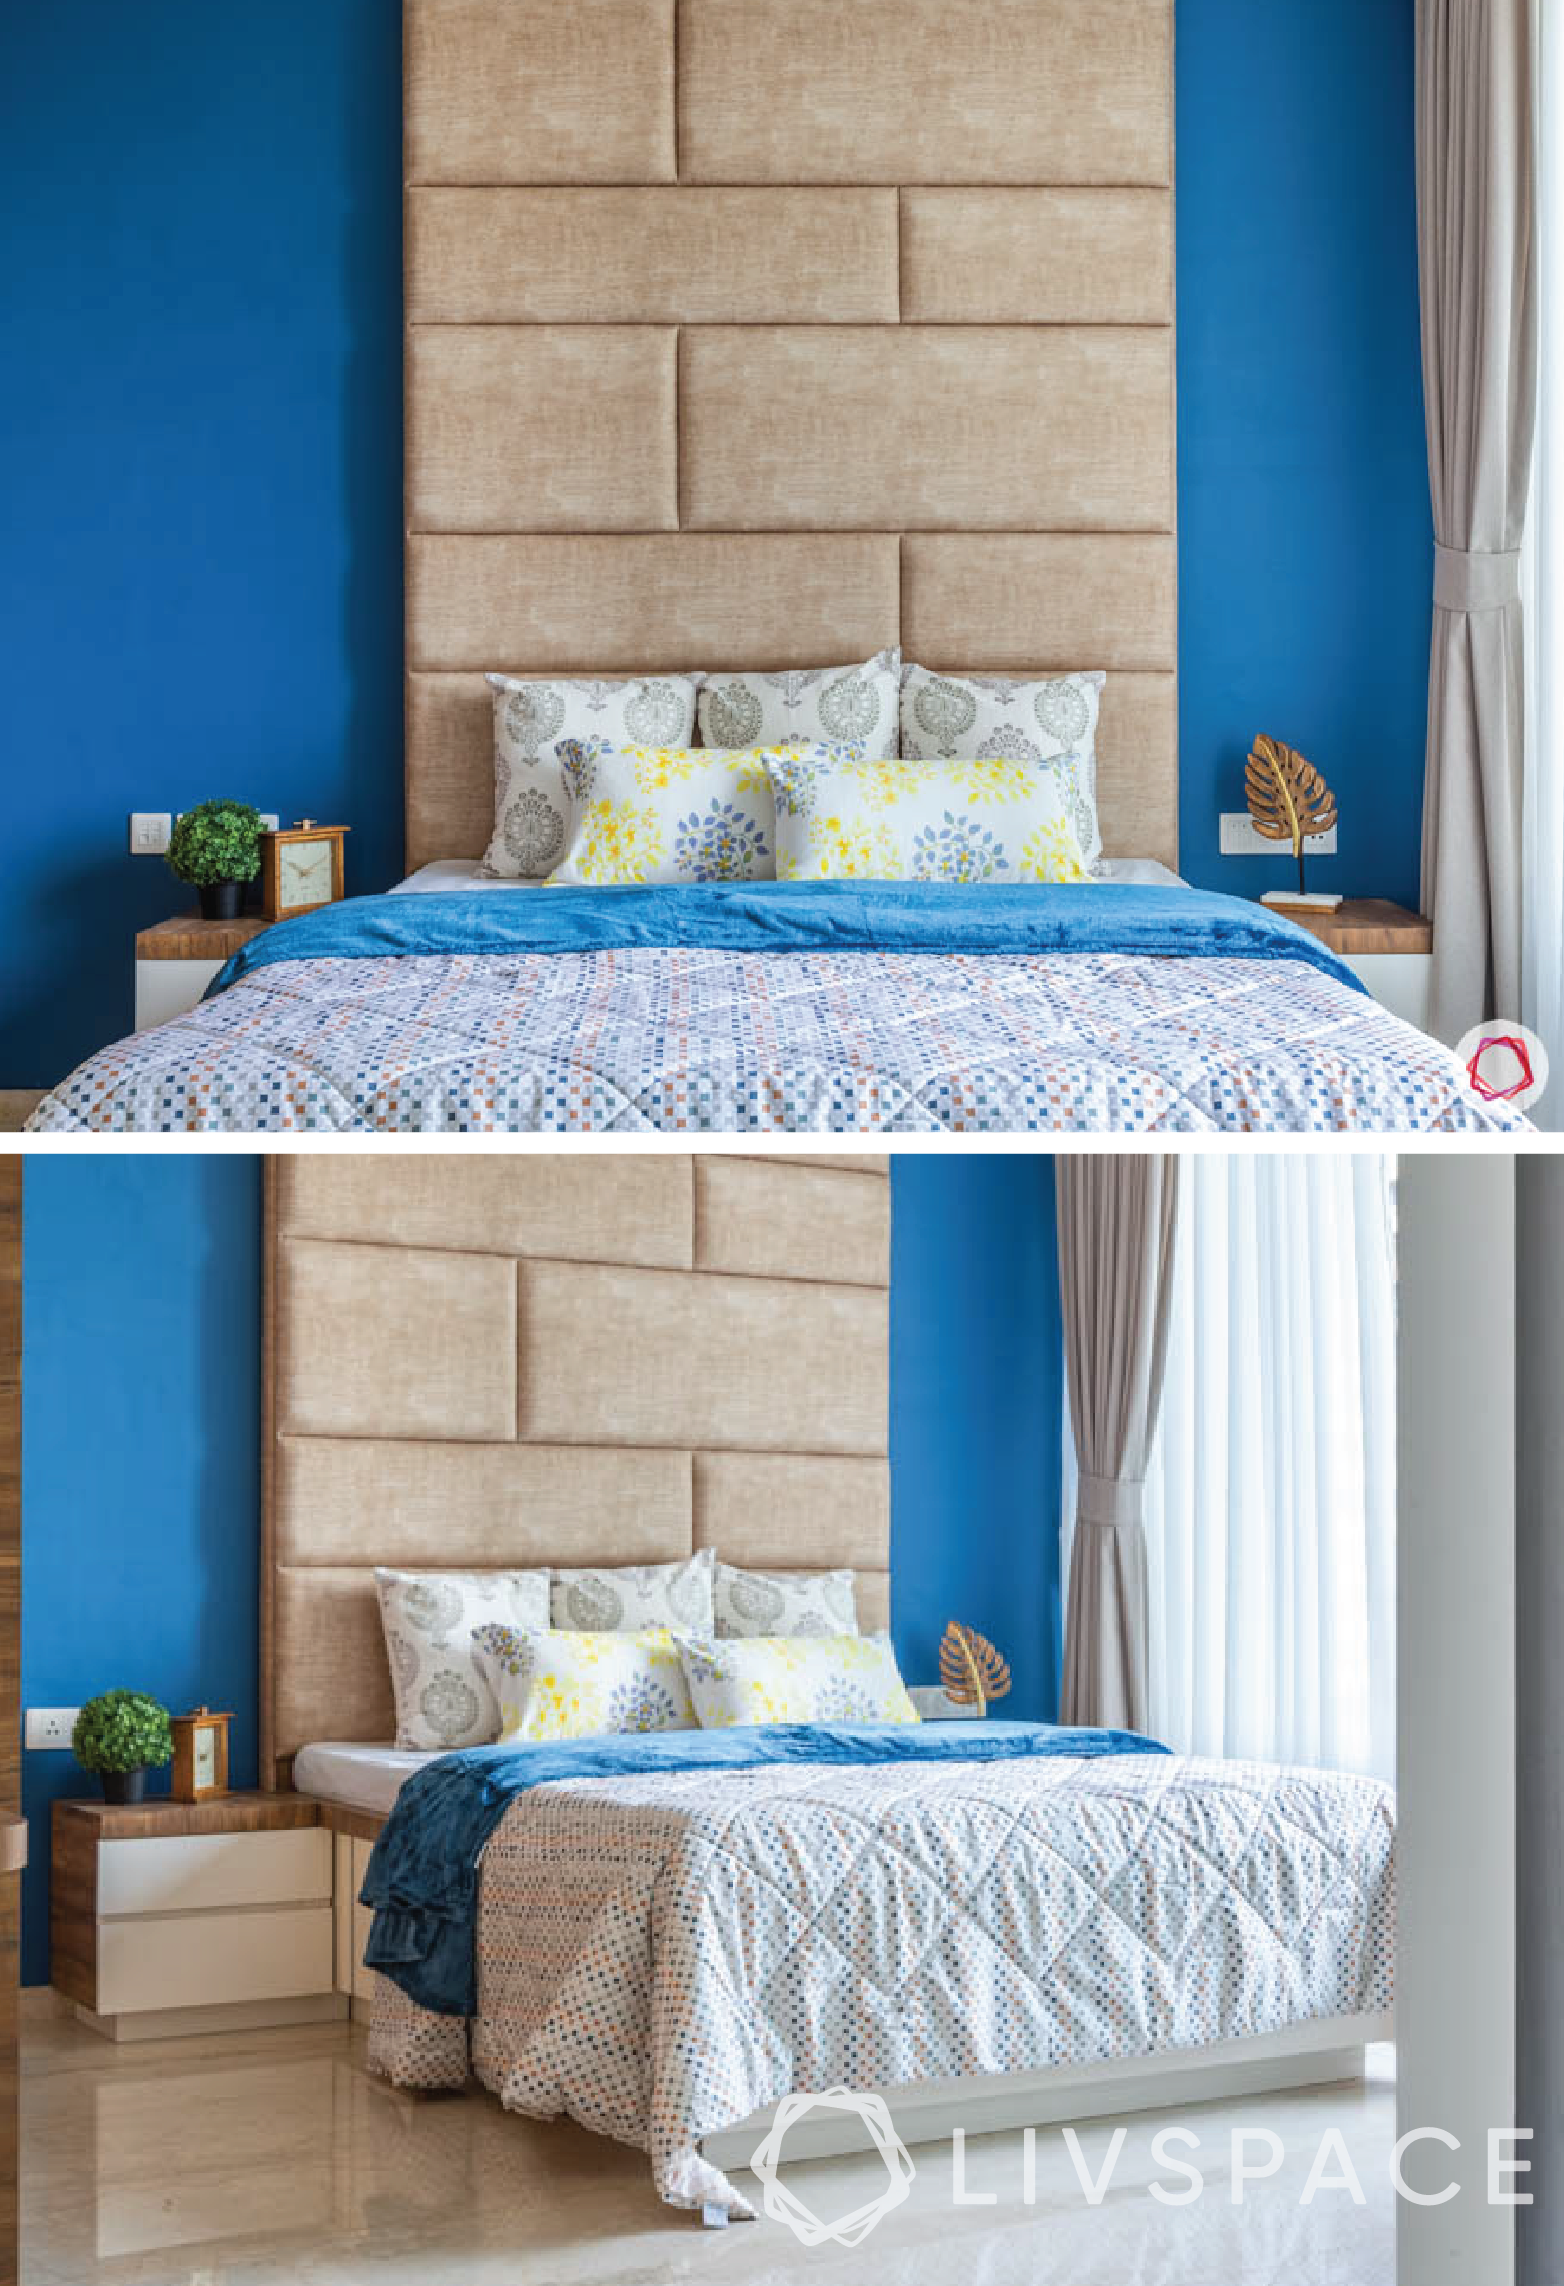  blue-and-wooden-bedroom-design
